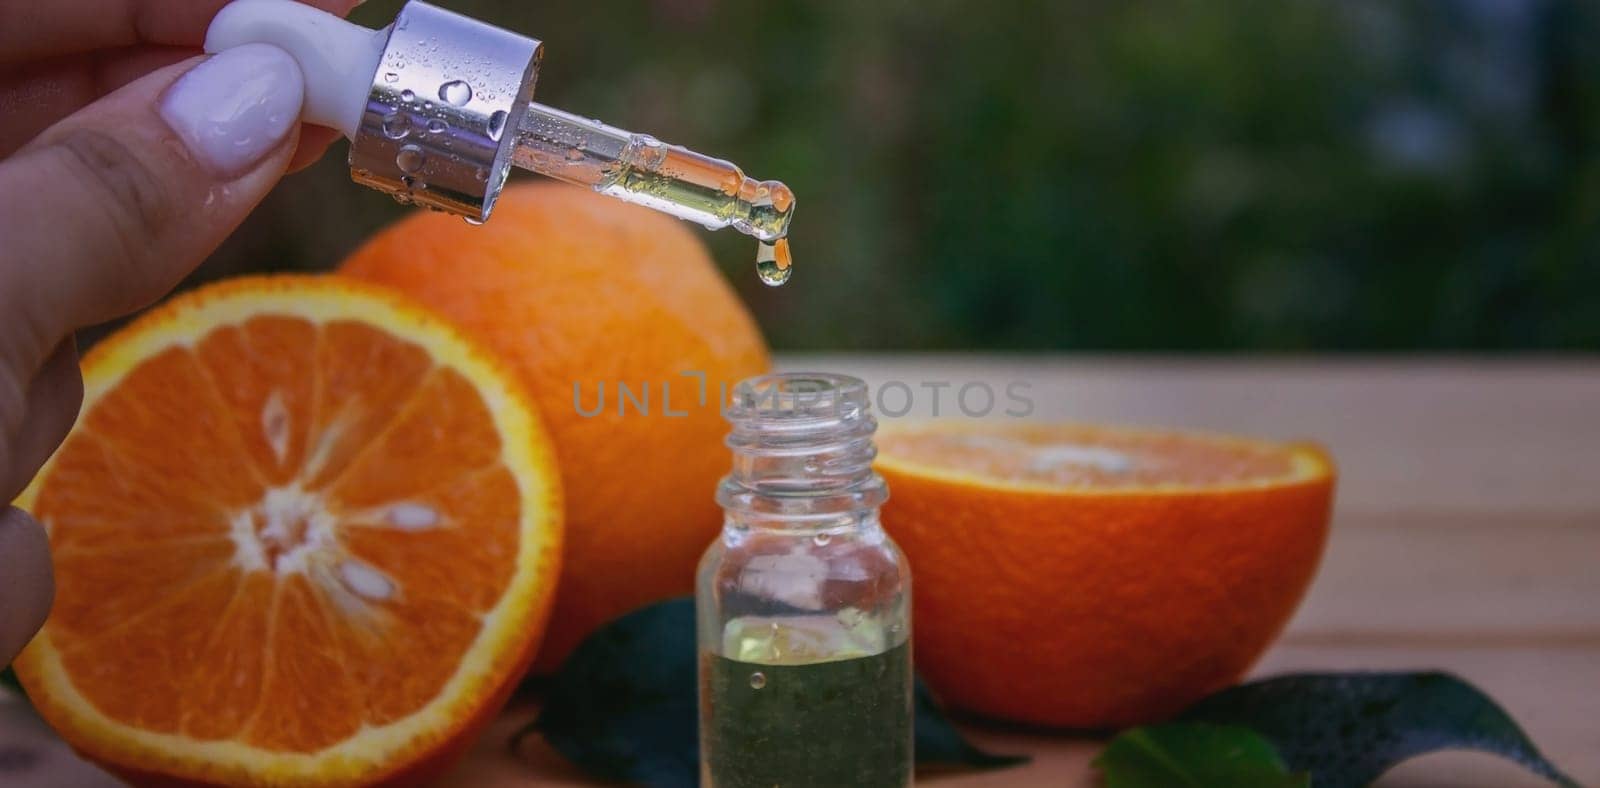 bottle of aromatic essence and fresh orange on the background of nature